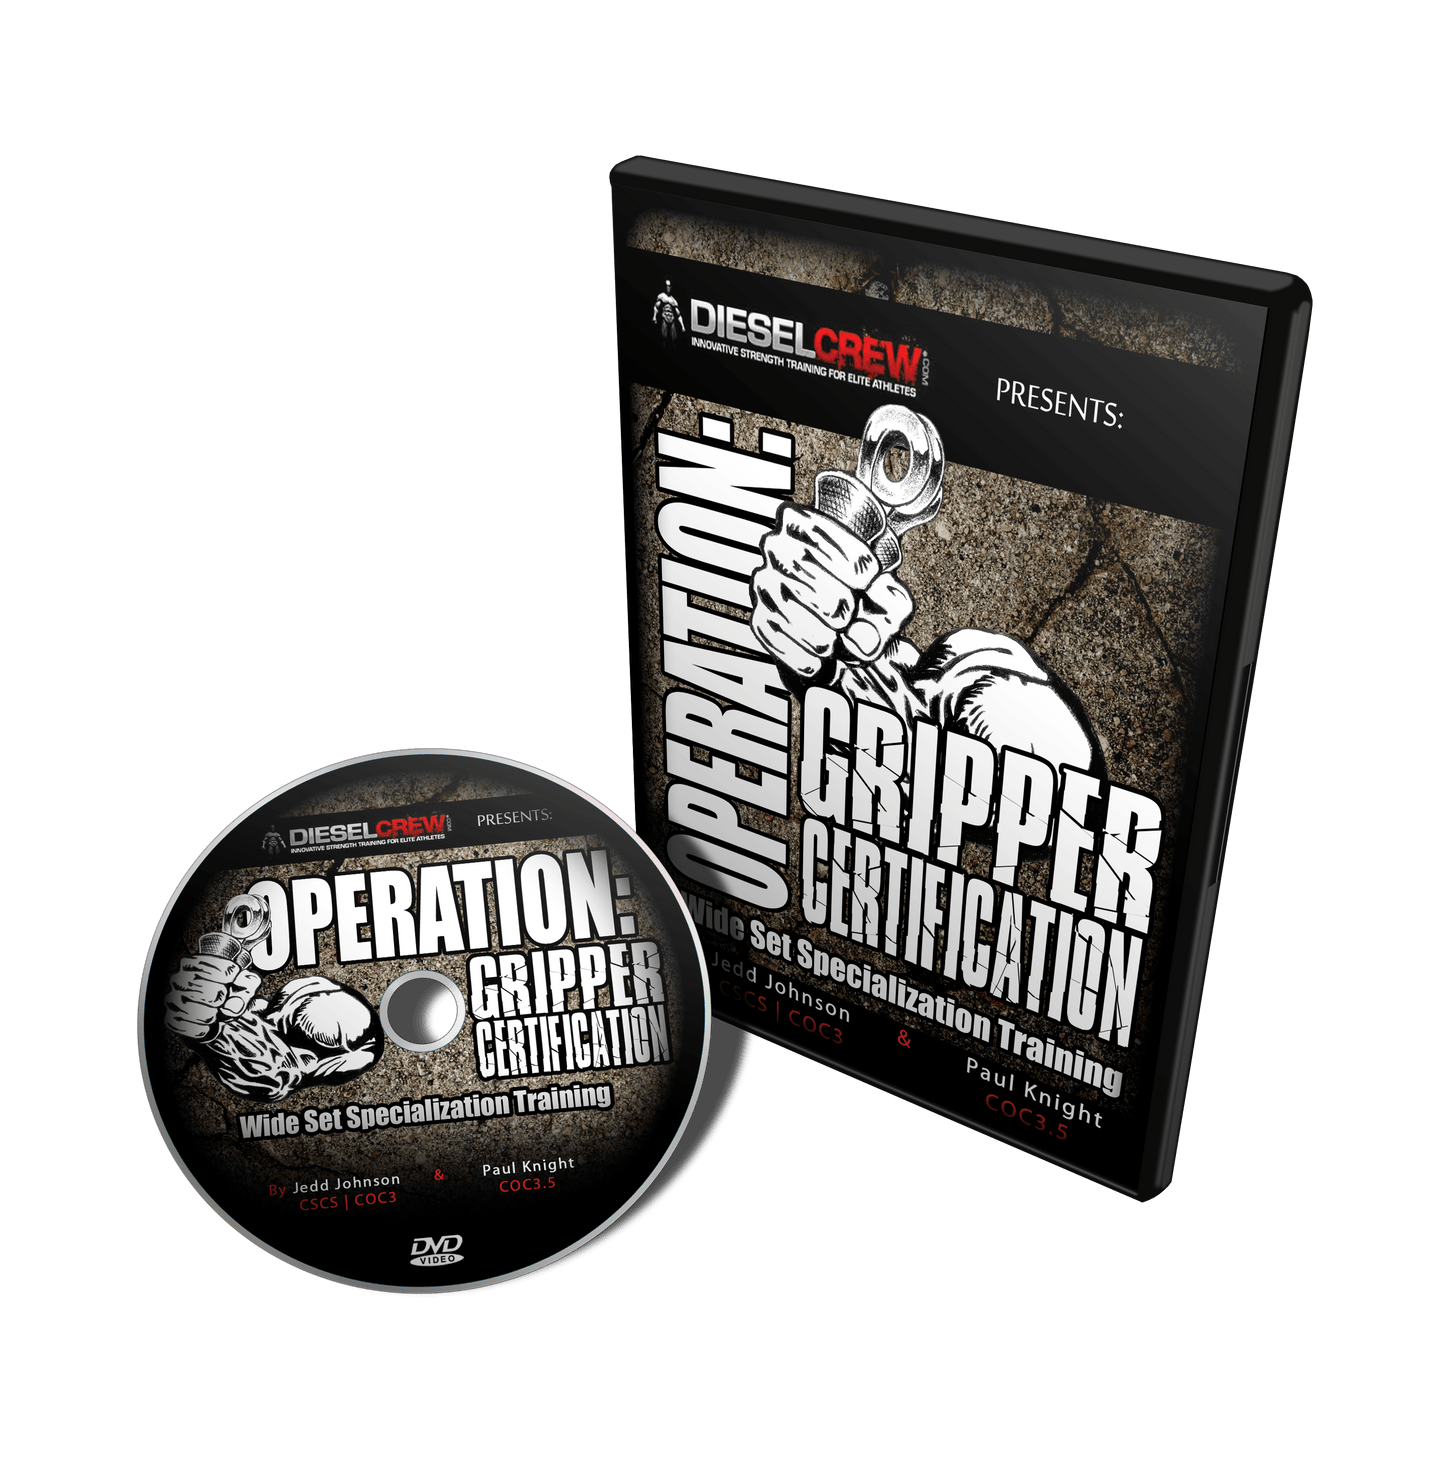 Gripper Certification Digital DVD by Jedd Johnson